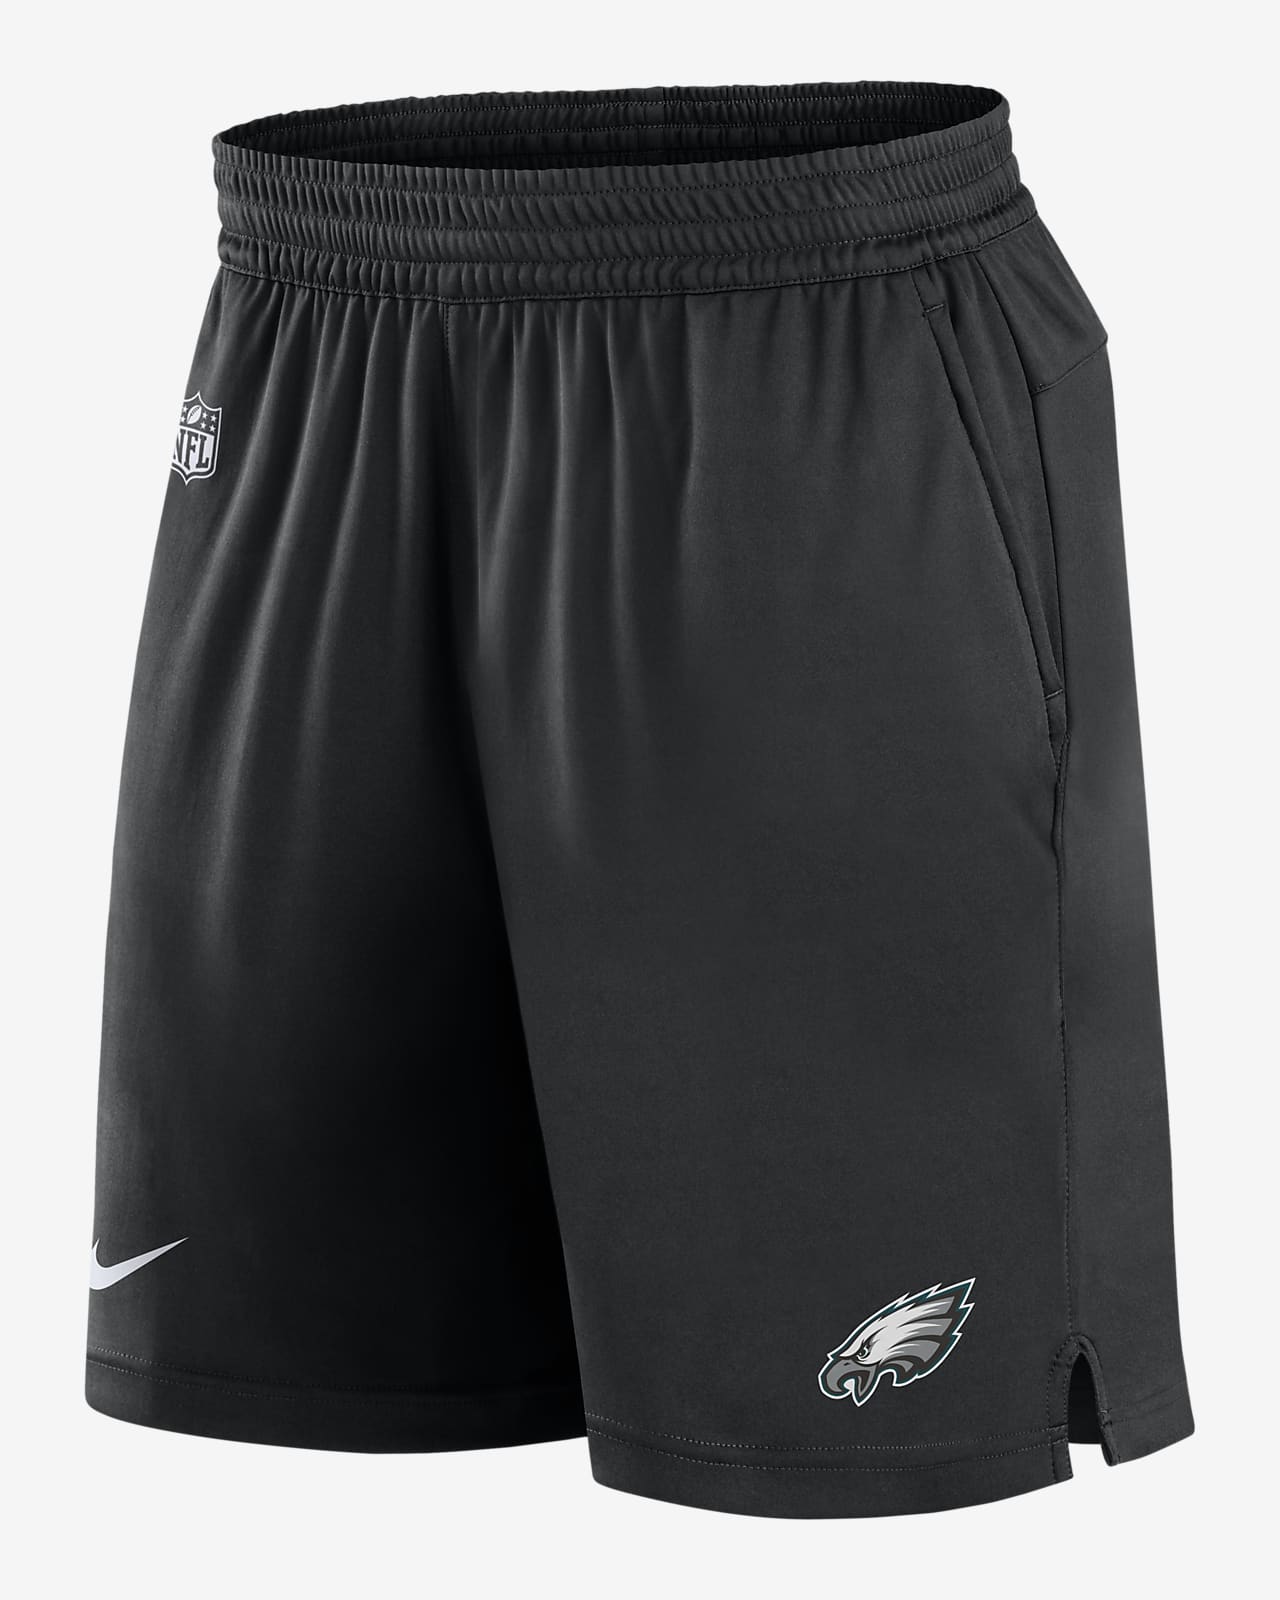 Nike Dri-FIT Sideline (NFL Philadelphia Eagles) Men's Shorts.